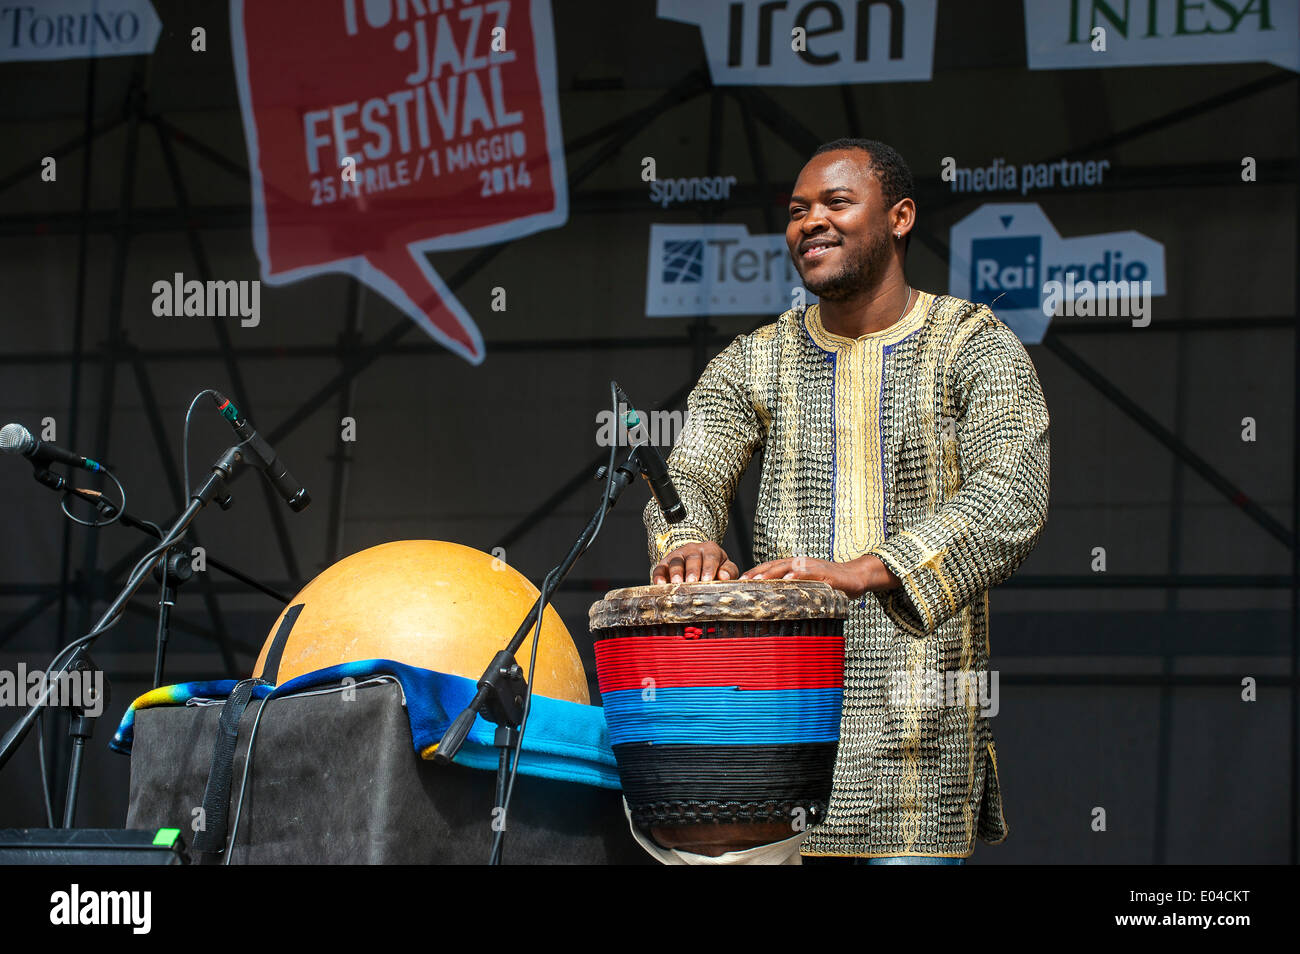 Turin, Italie. 01 mai, 2014. La Piazza Castello ' Torino Jazz Festival ' - Taranta nera - Salento a rencontré l'Afrique - Kalifa Kone Crédit : Realy Easy Star/Alamy Live News Banque D'Images